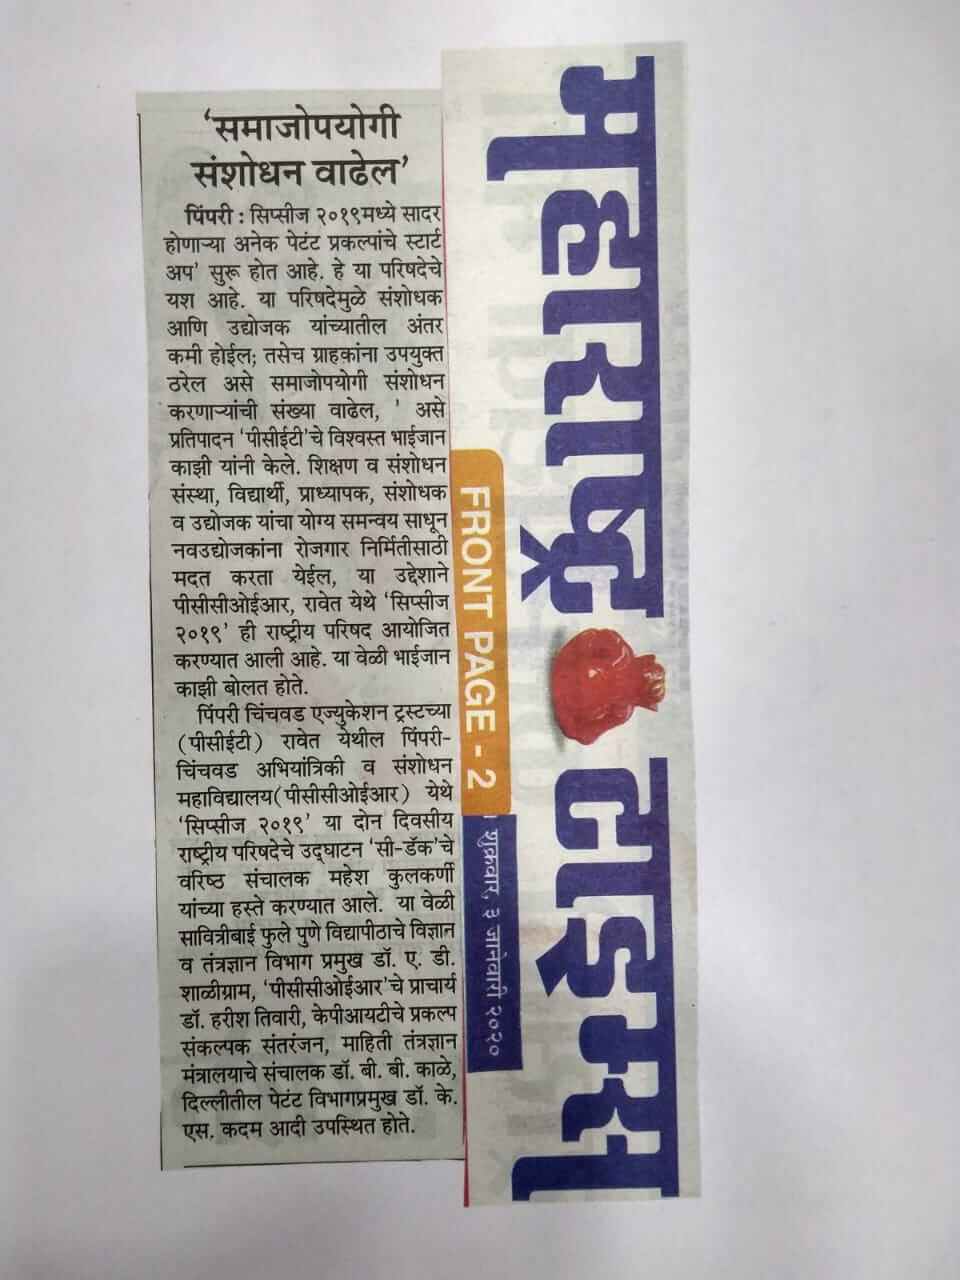 News in Maharashtra Times 3 JAN 2020 Page No 4, PCCOER